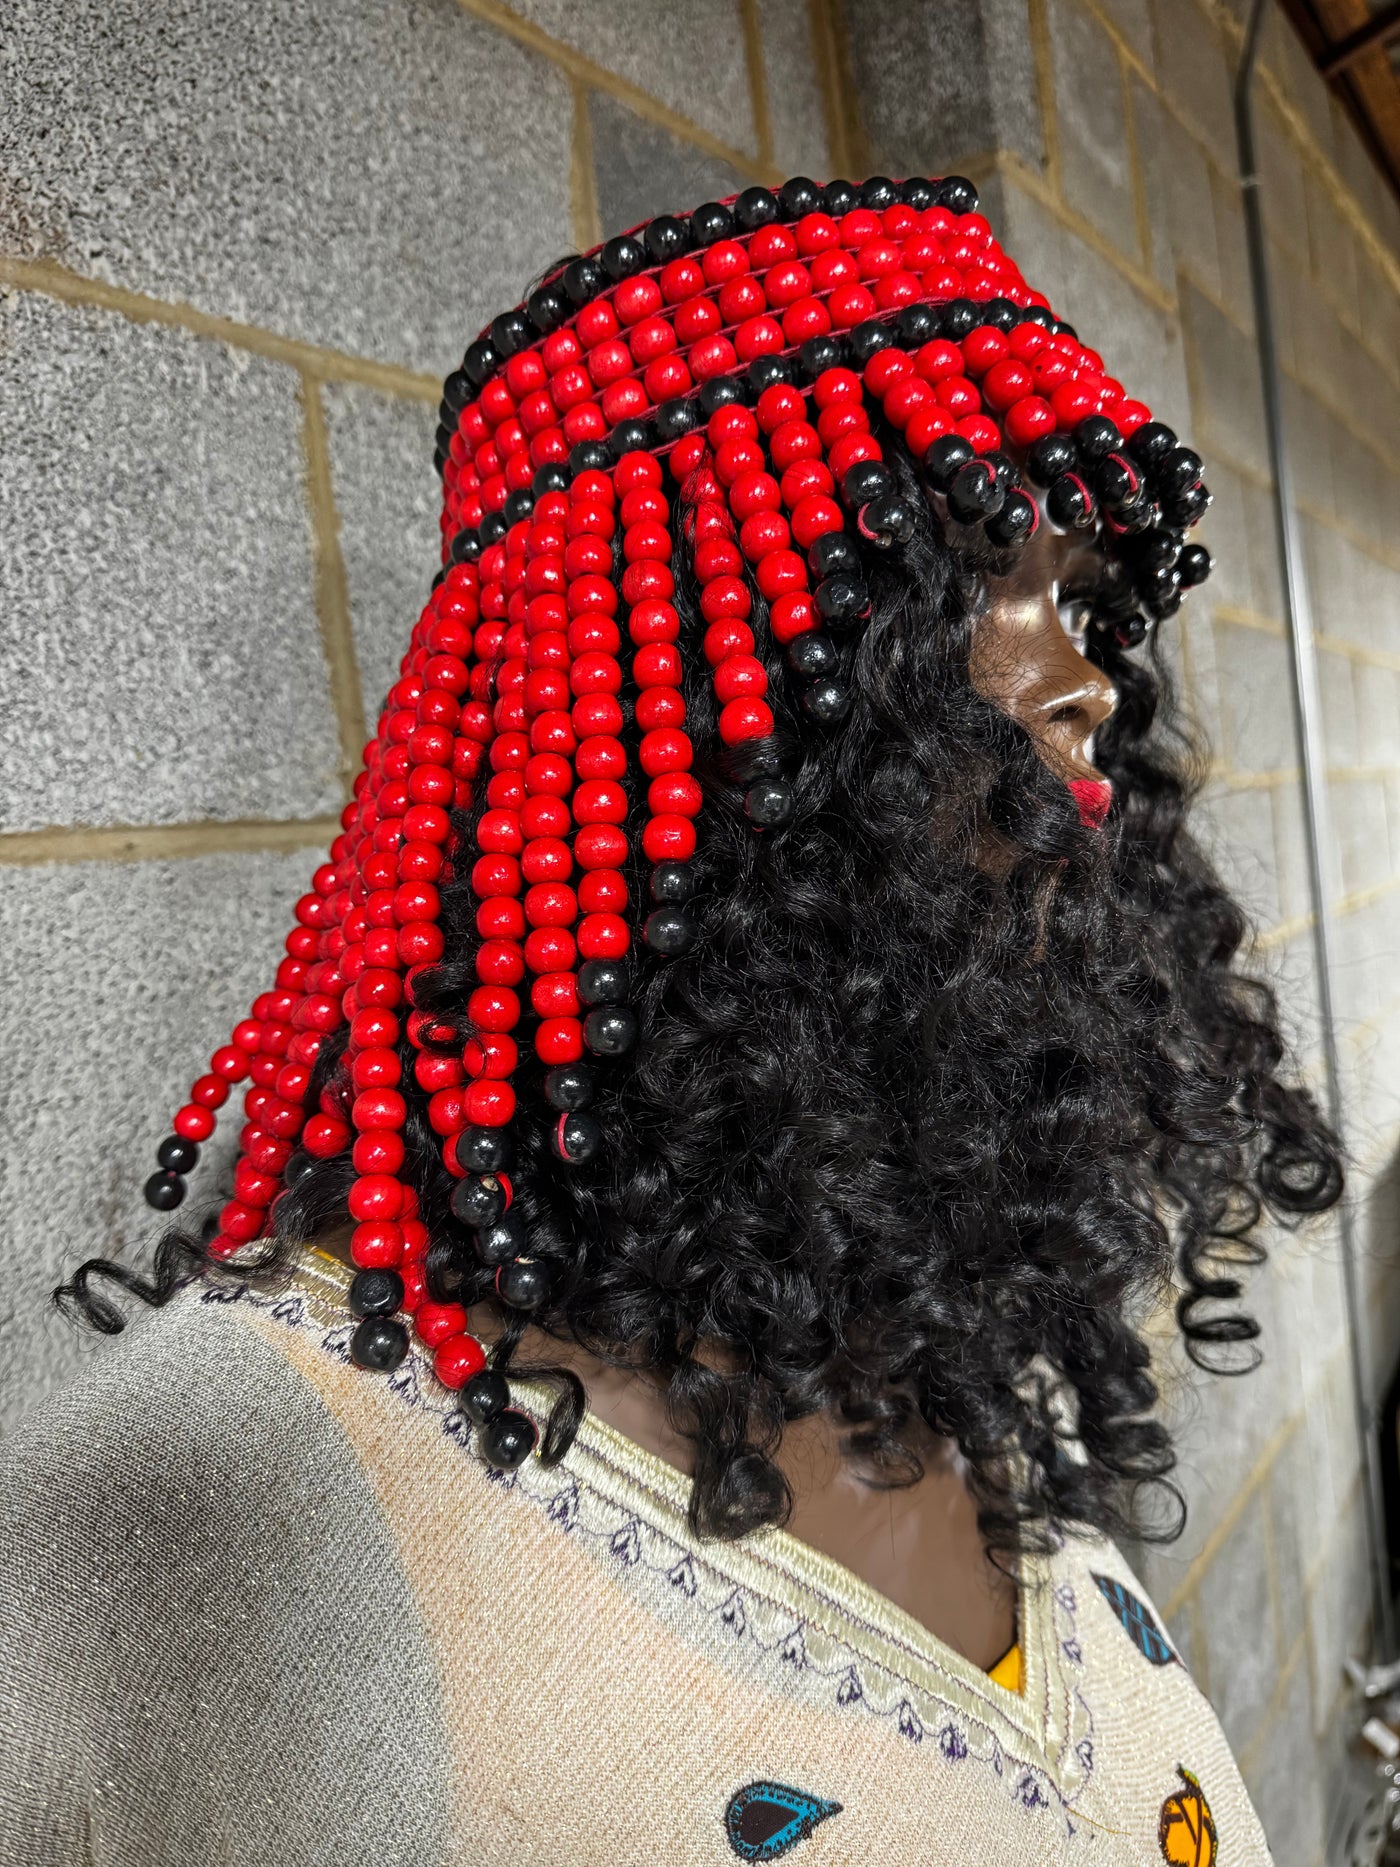 Queen of Egypt Wooden beads Headpiece